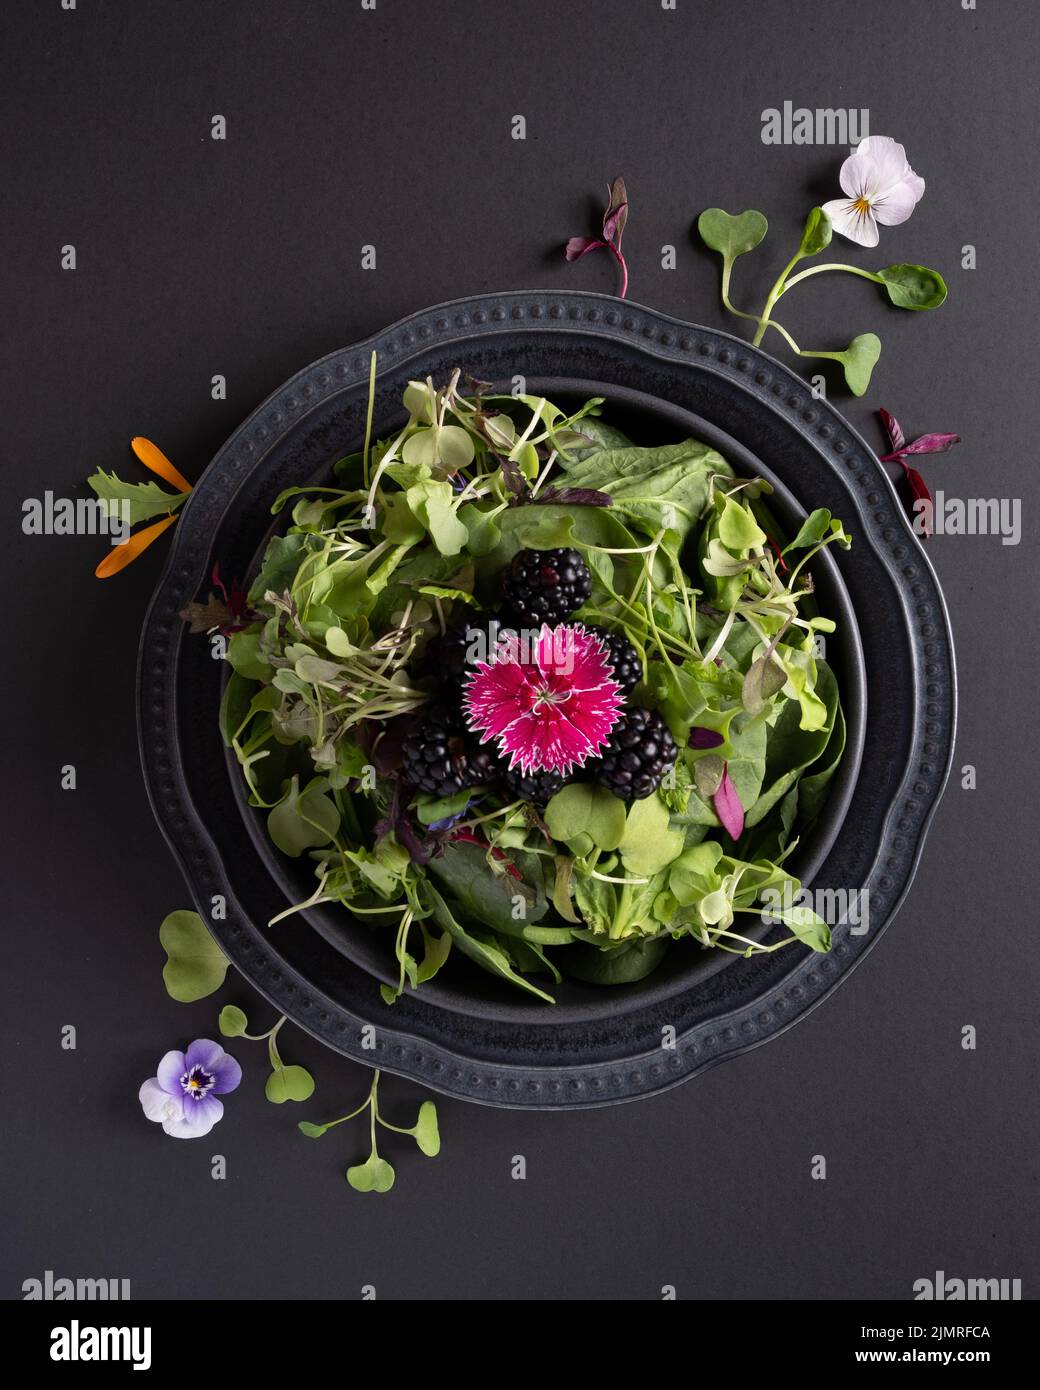 Edible flowers on salad Stock Photo - Alamy